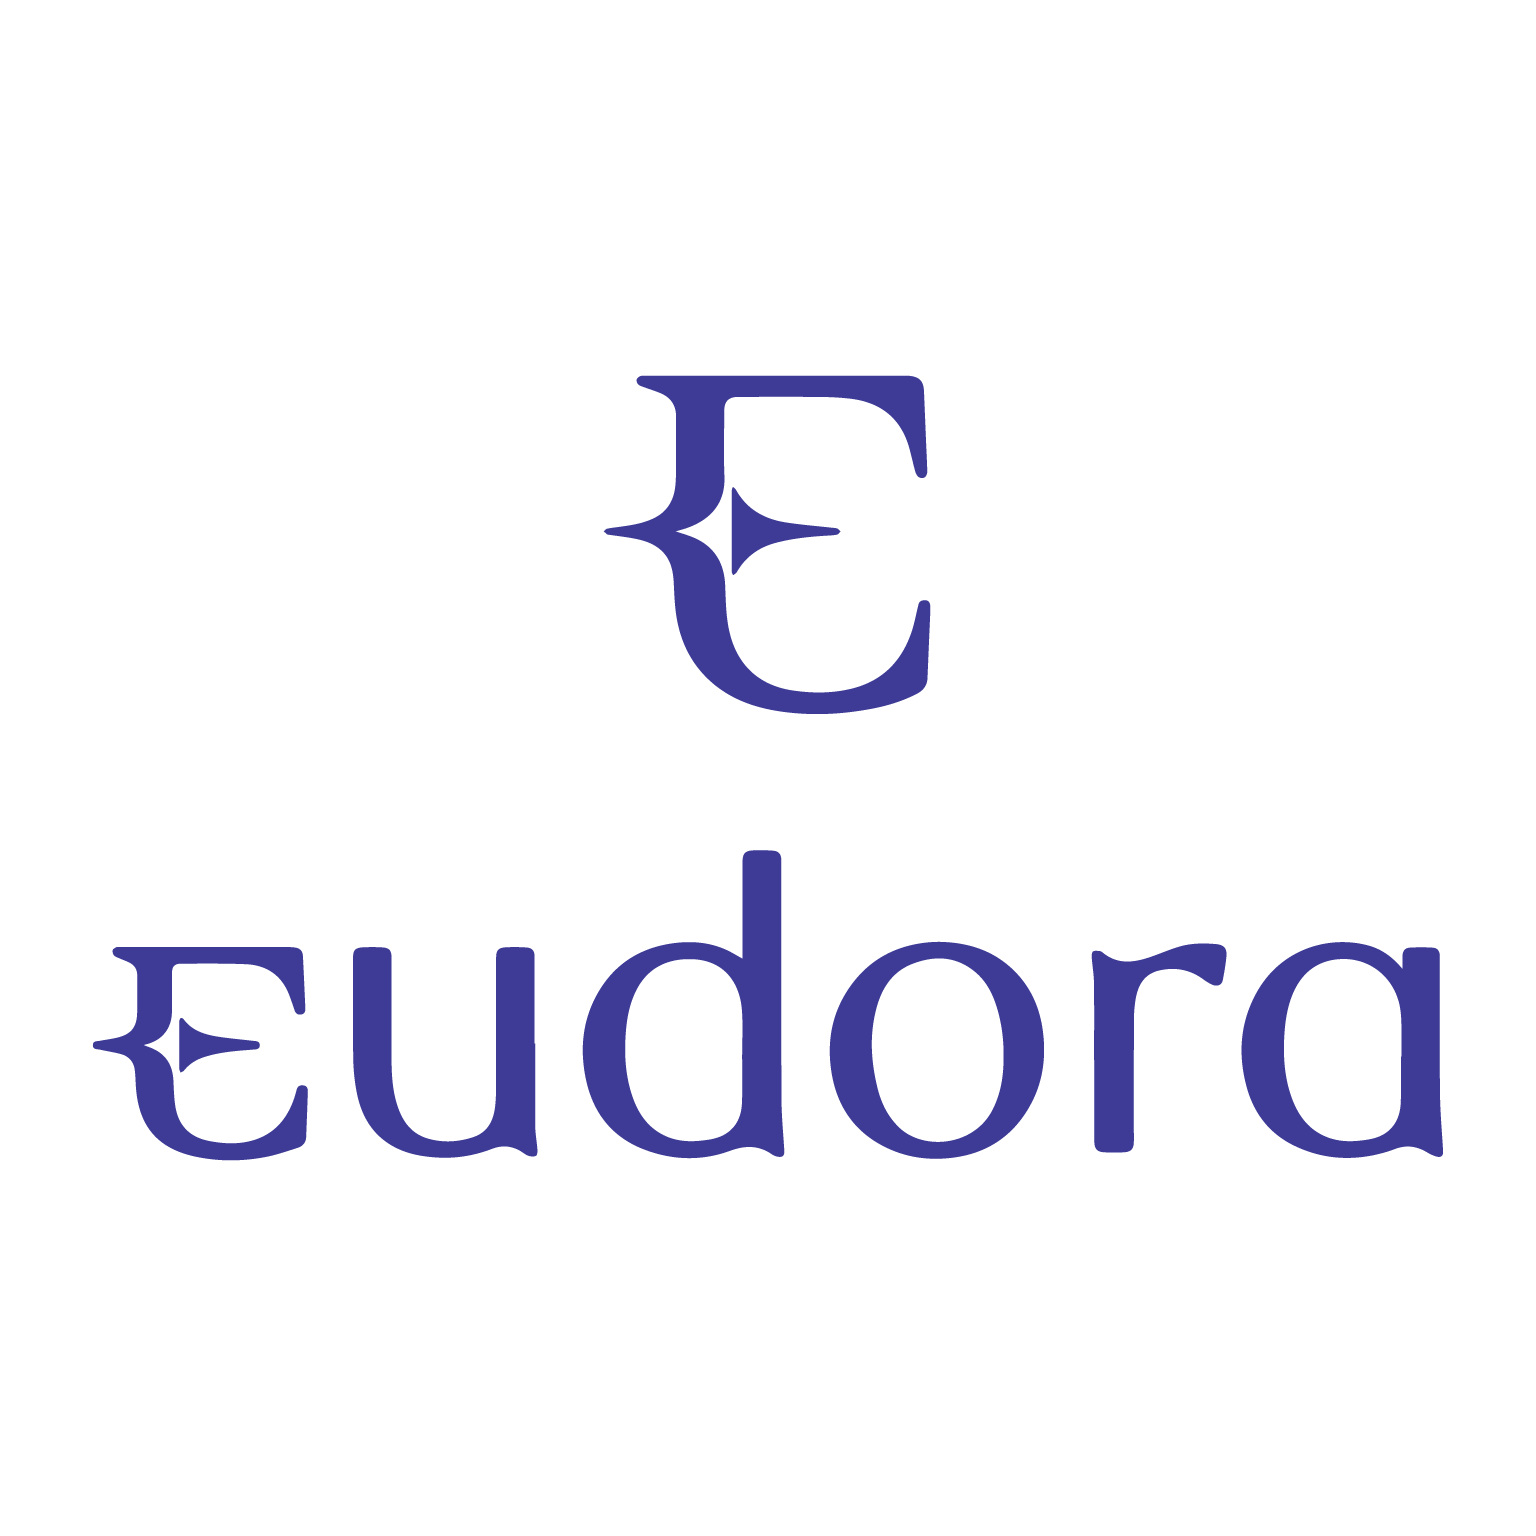 escudo eudora